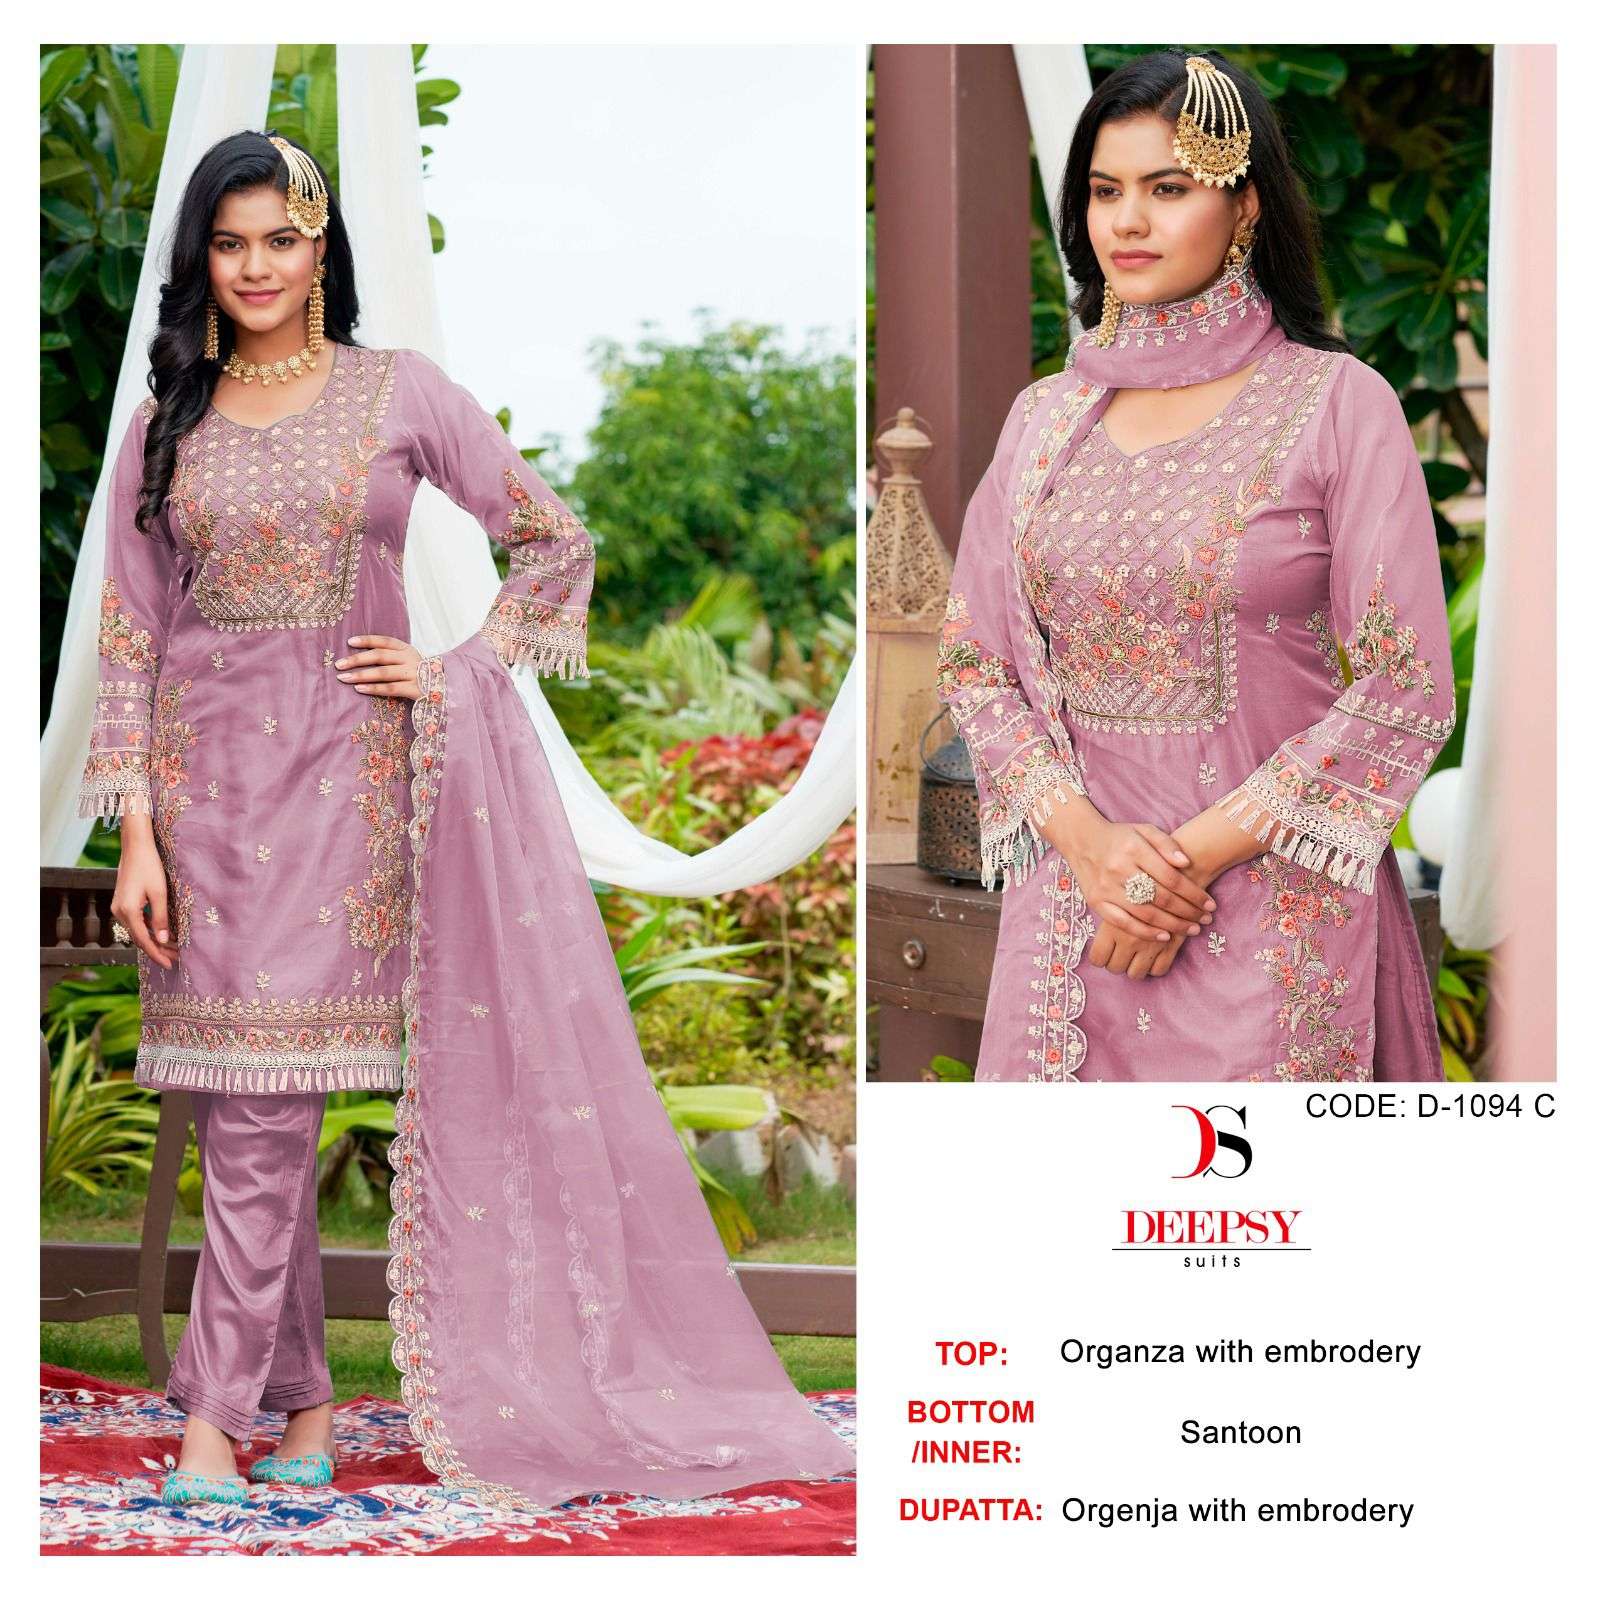 deepsy suits 1094 organza embroidered designer salwar suits wholesale price surat